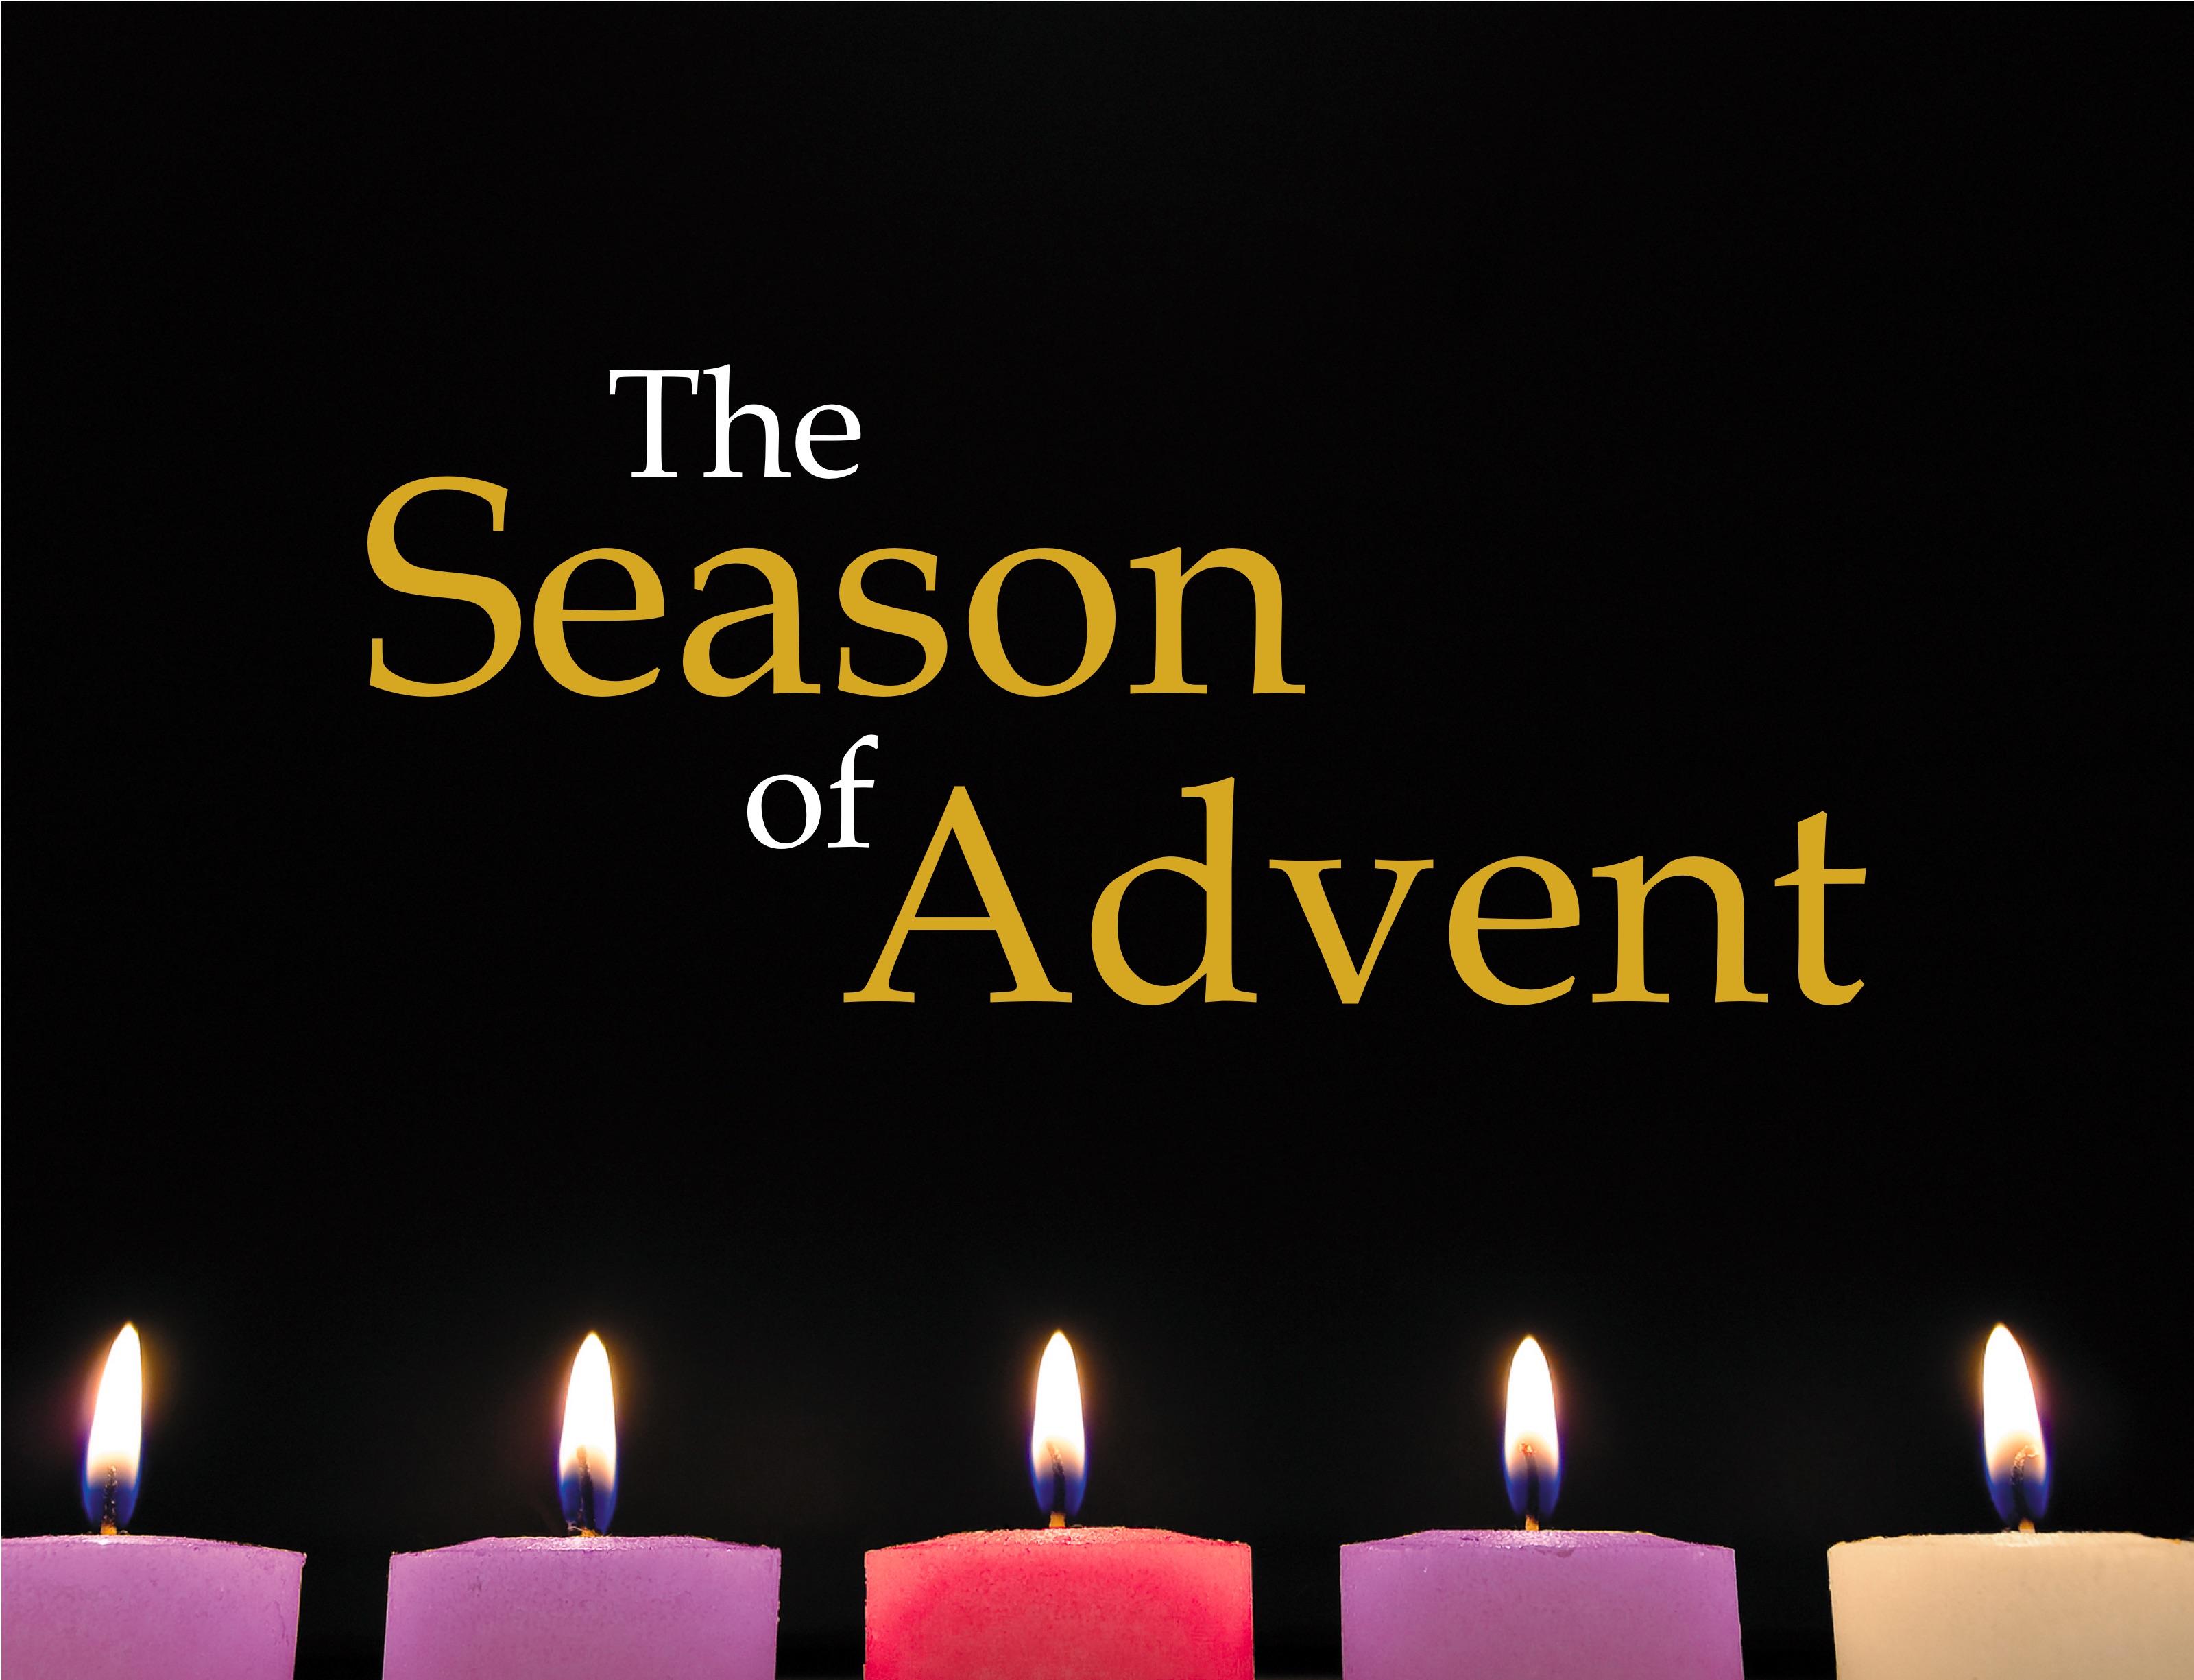 Advent Season